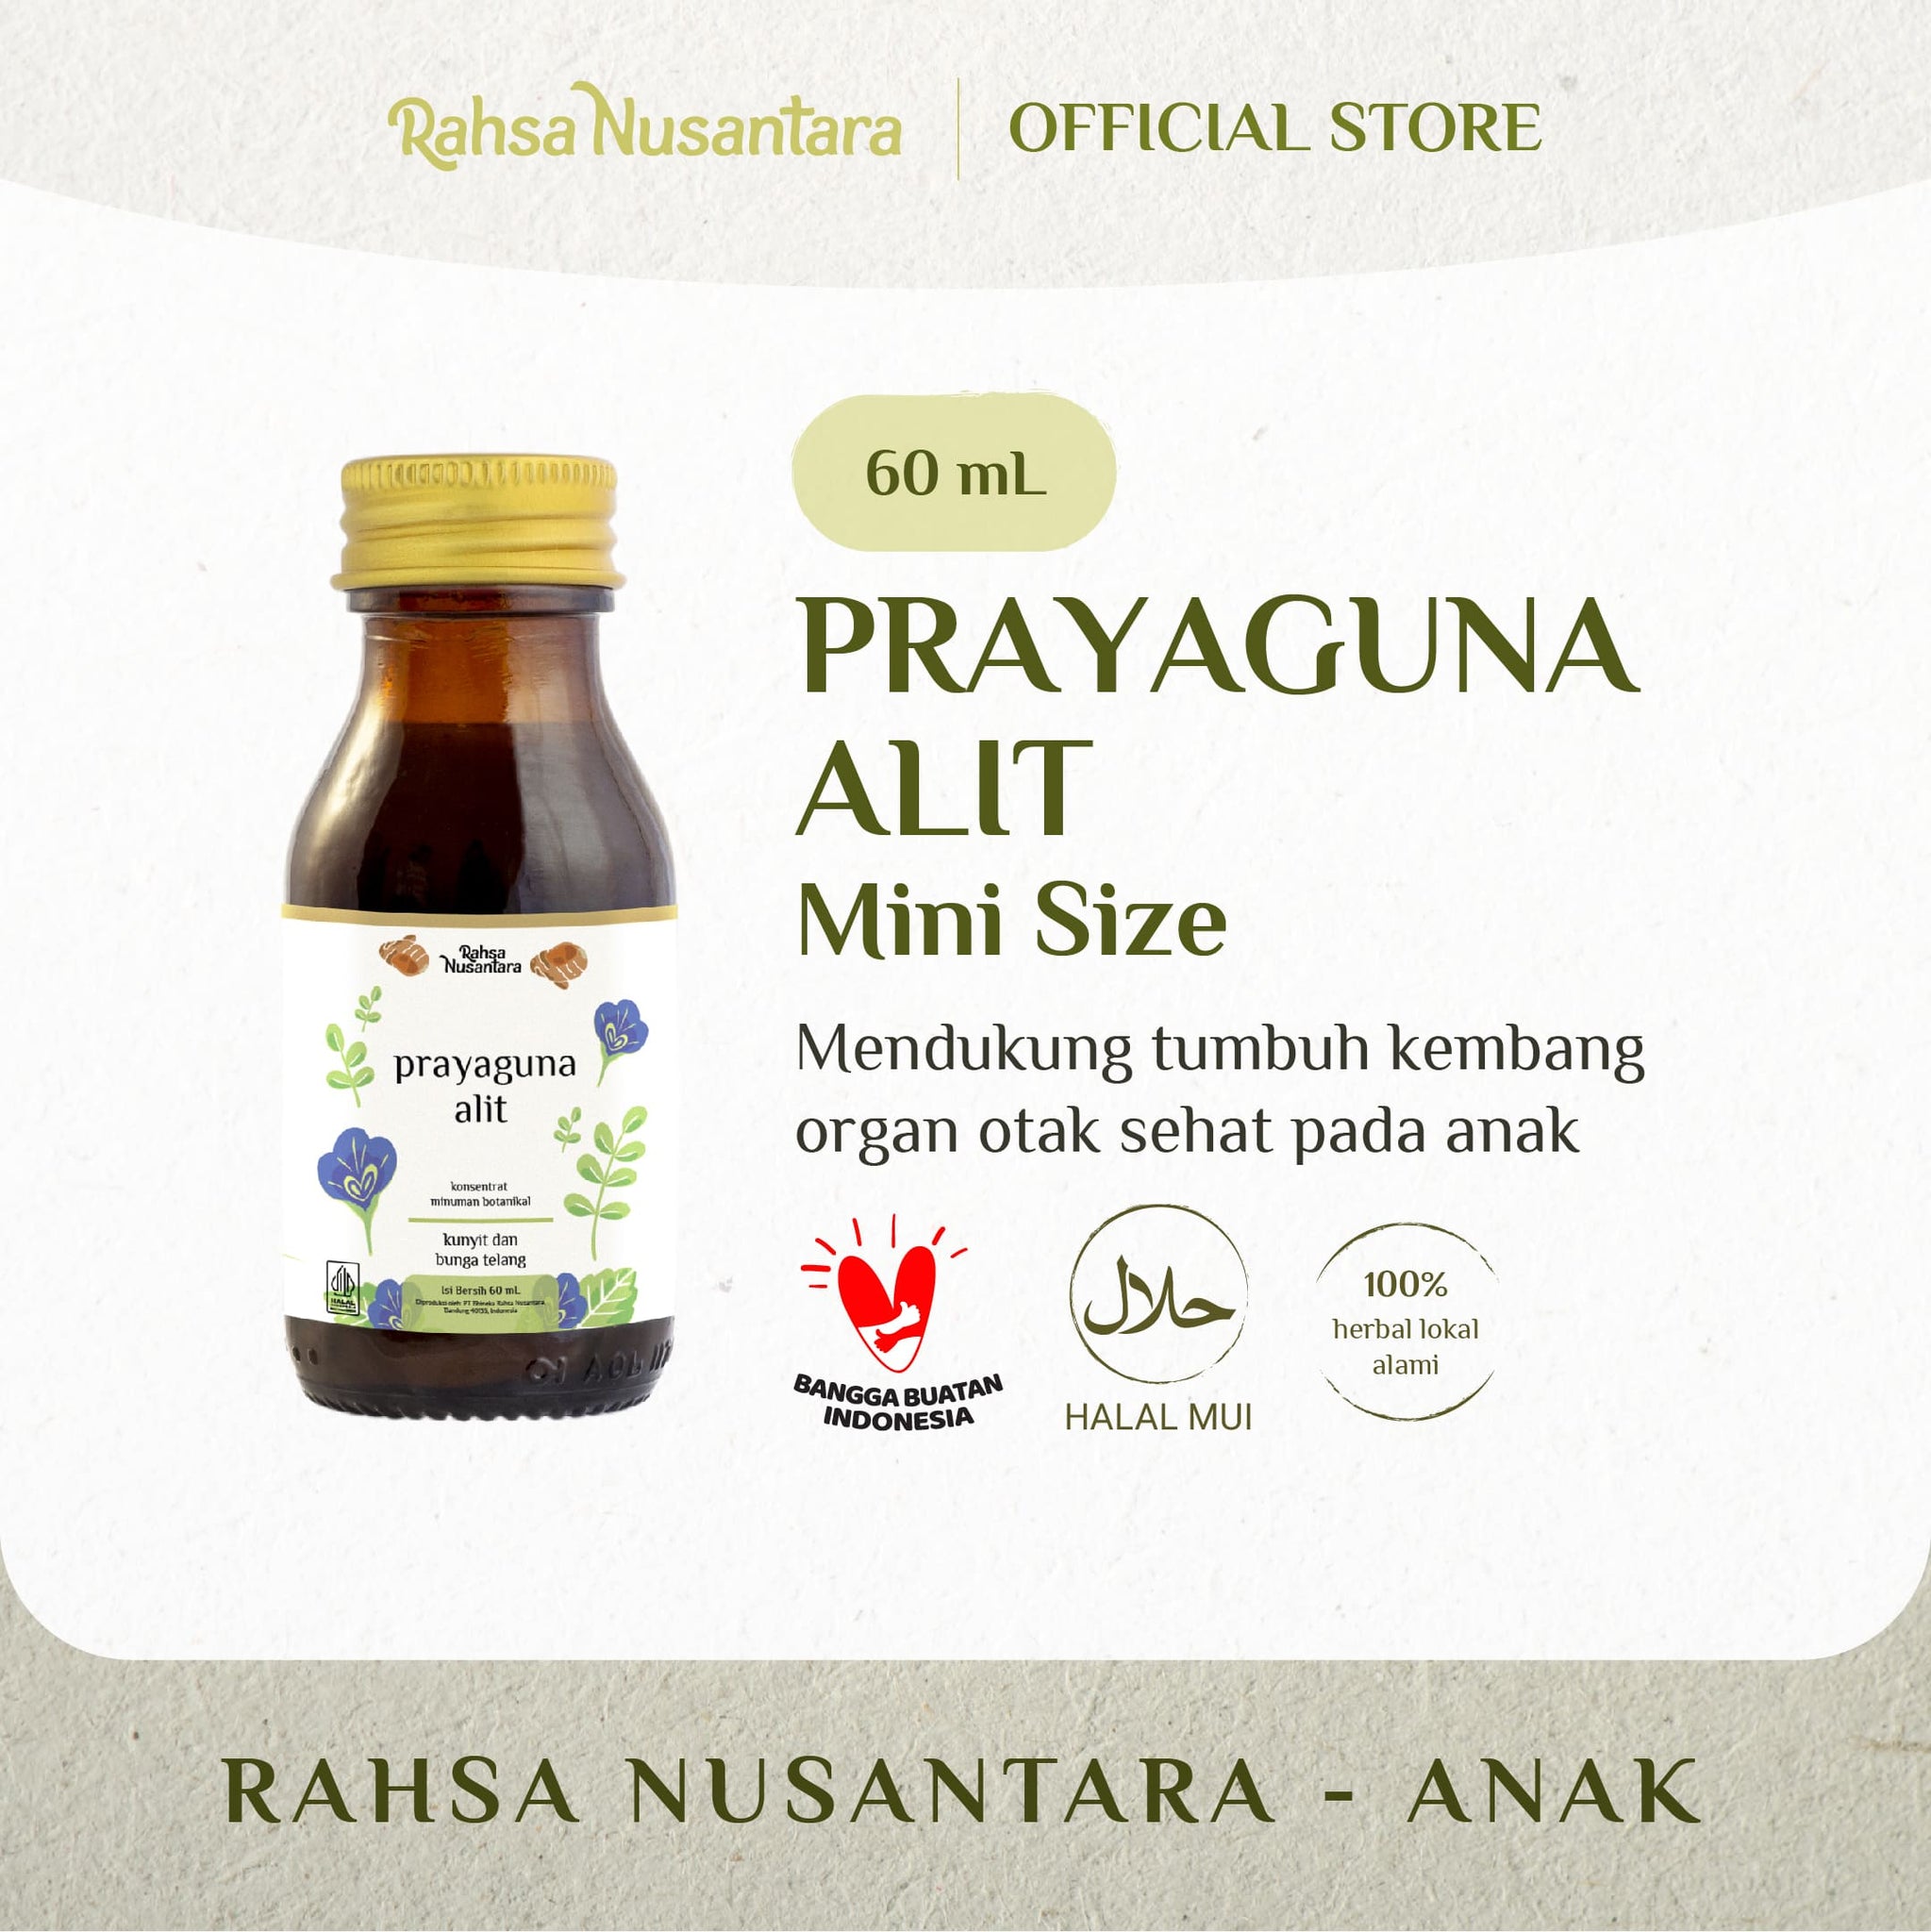 Mini Size Jagad Series by Rahsa Nusantara - Starter Pack